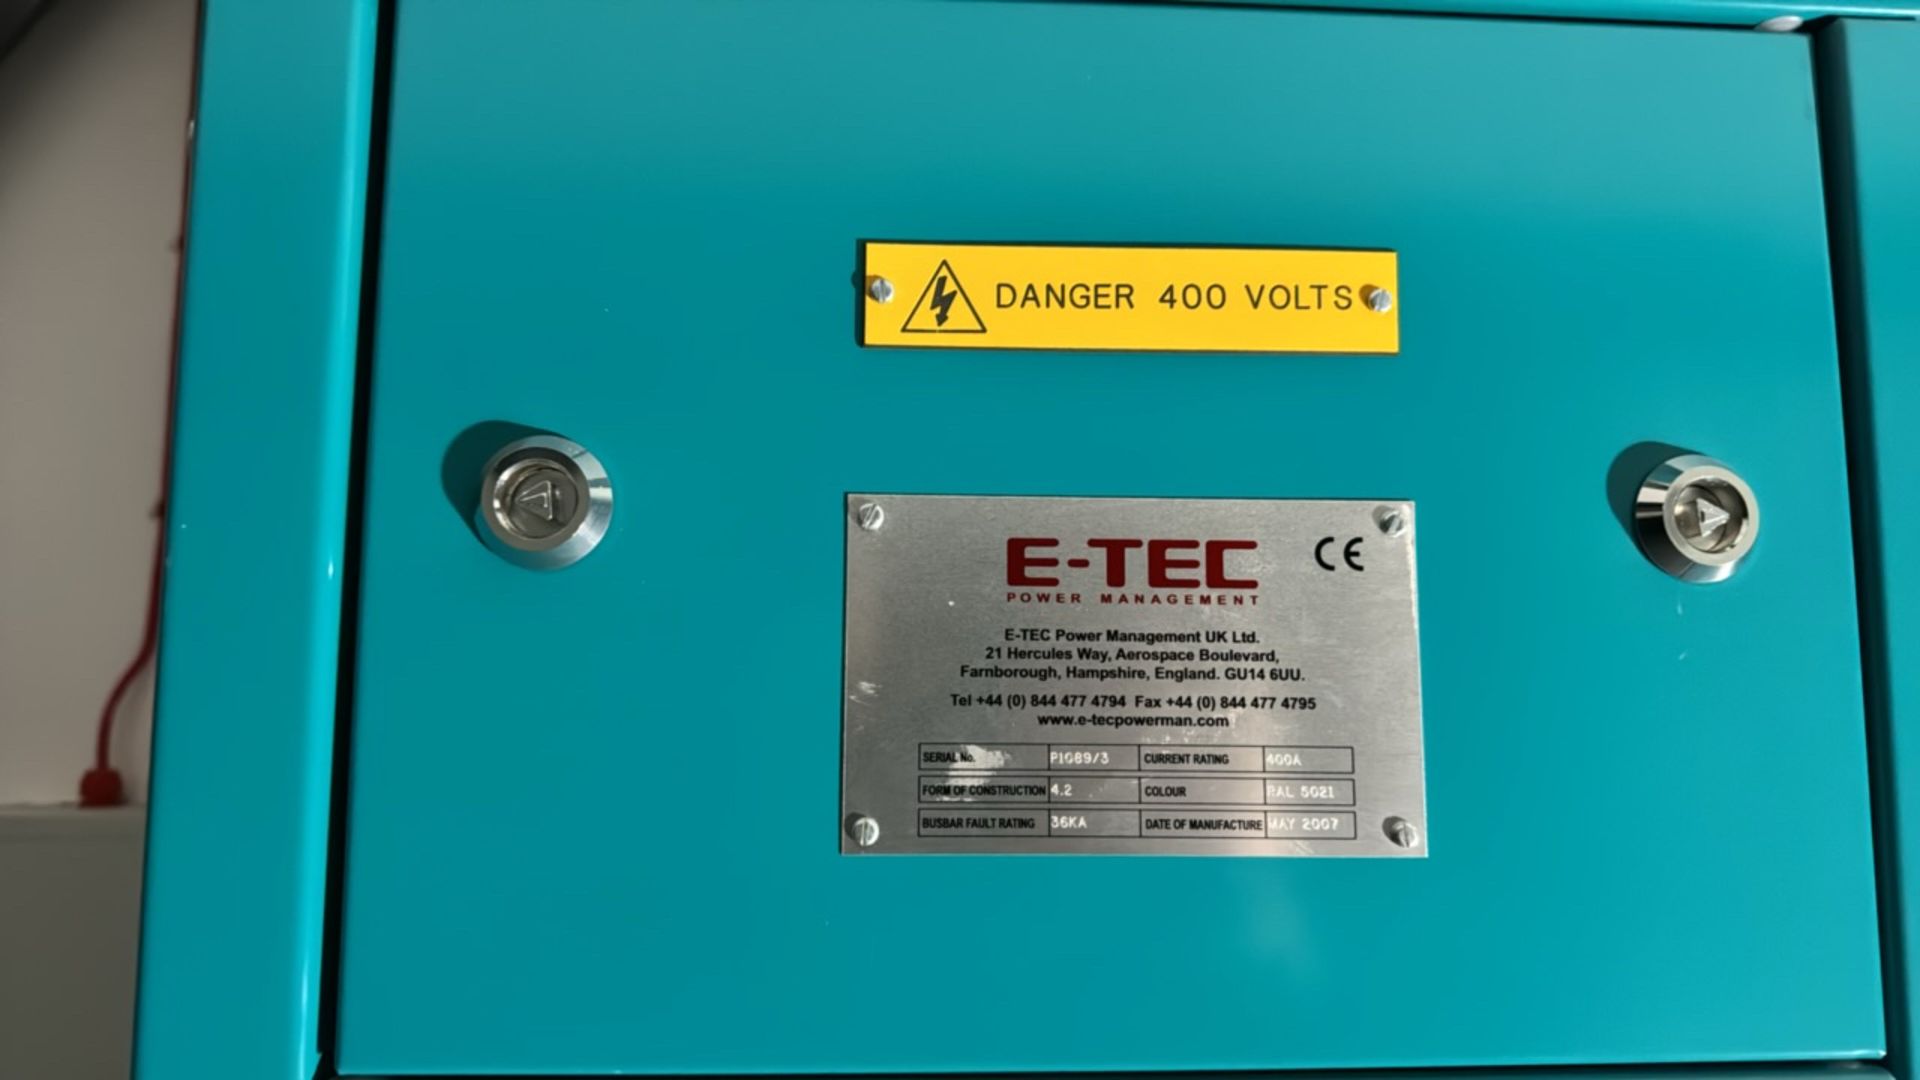 E-TEC Power Manager - Image 5 of 7